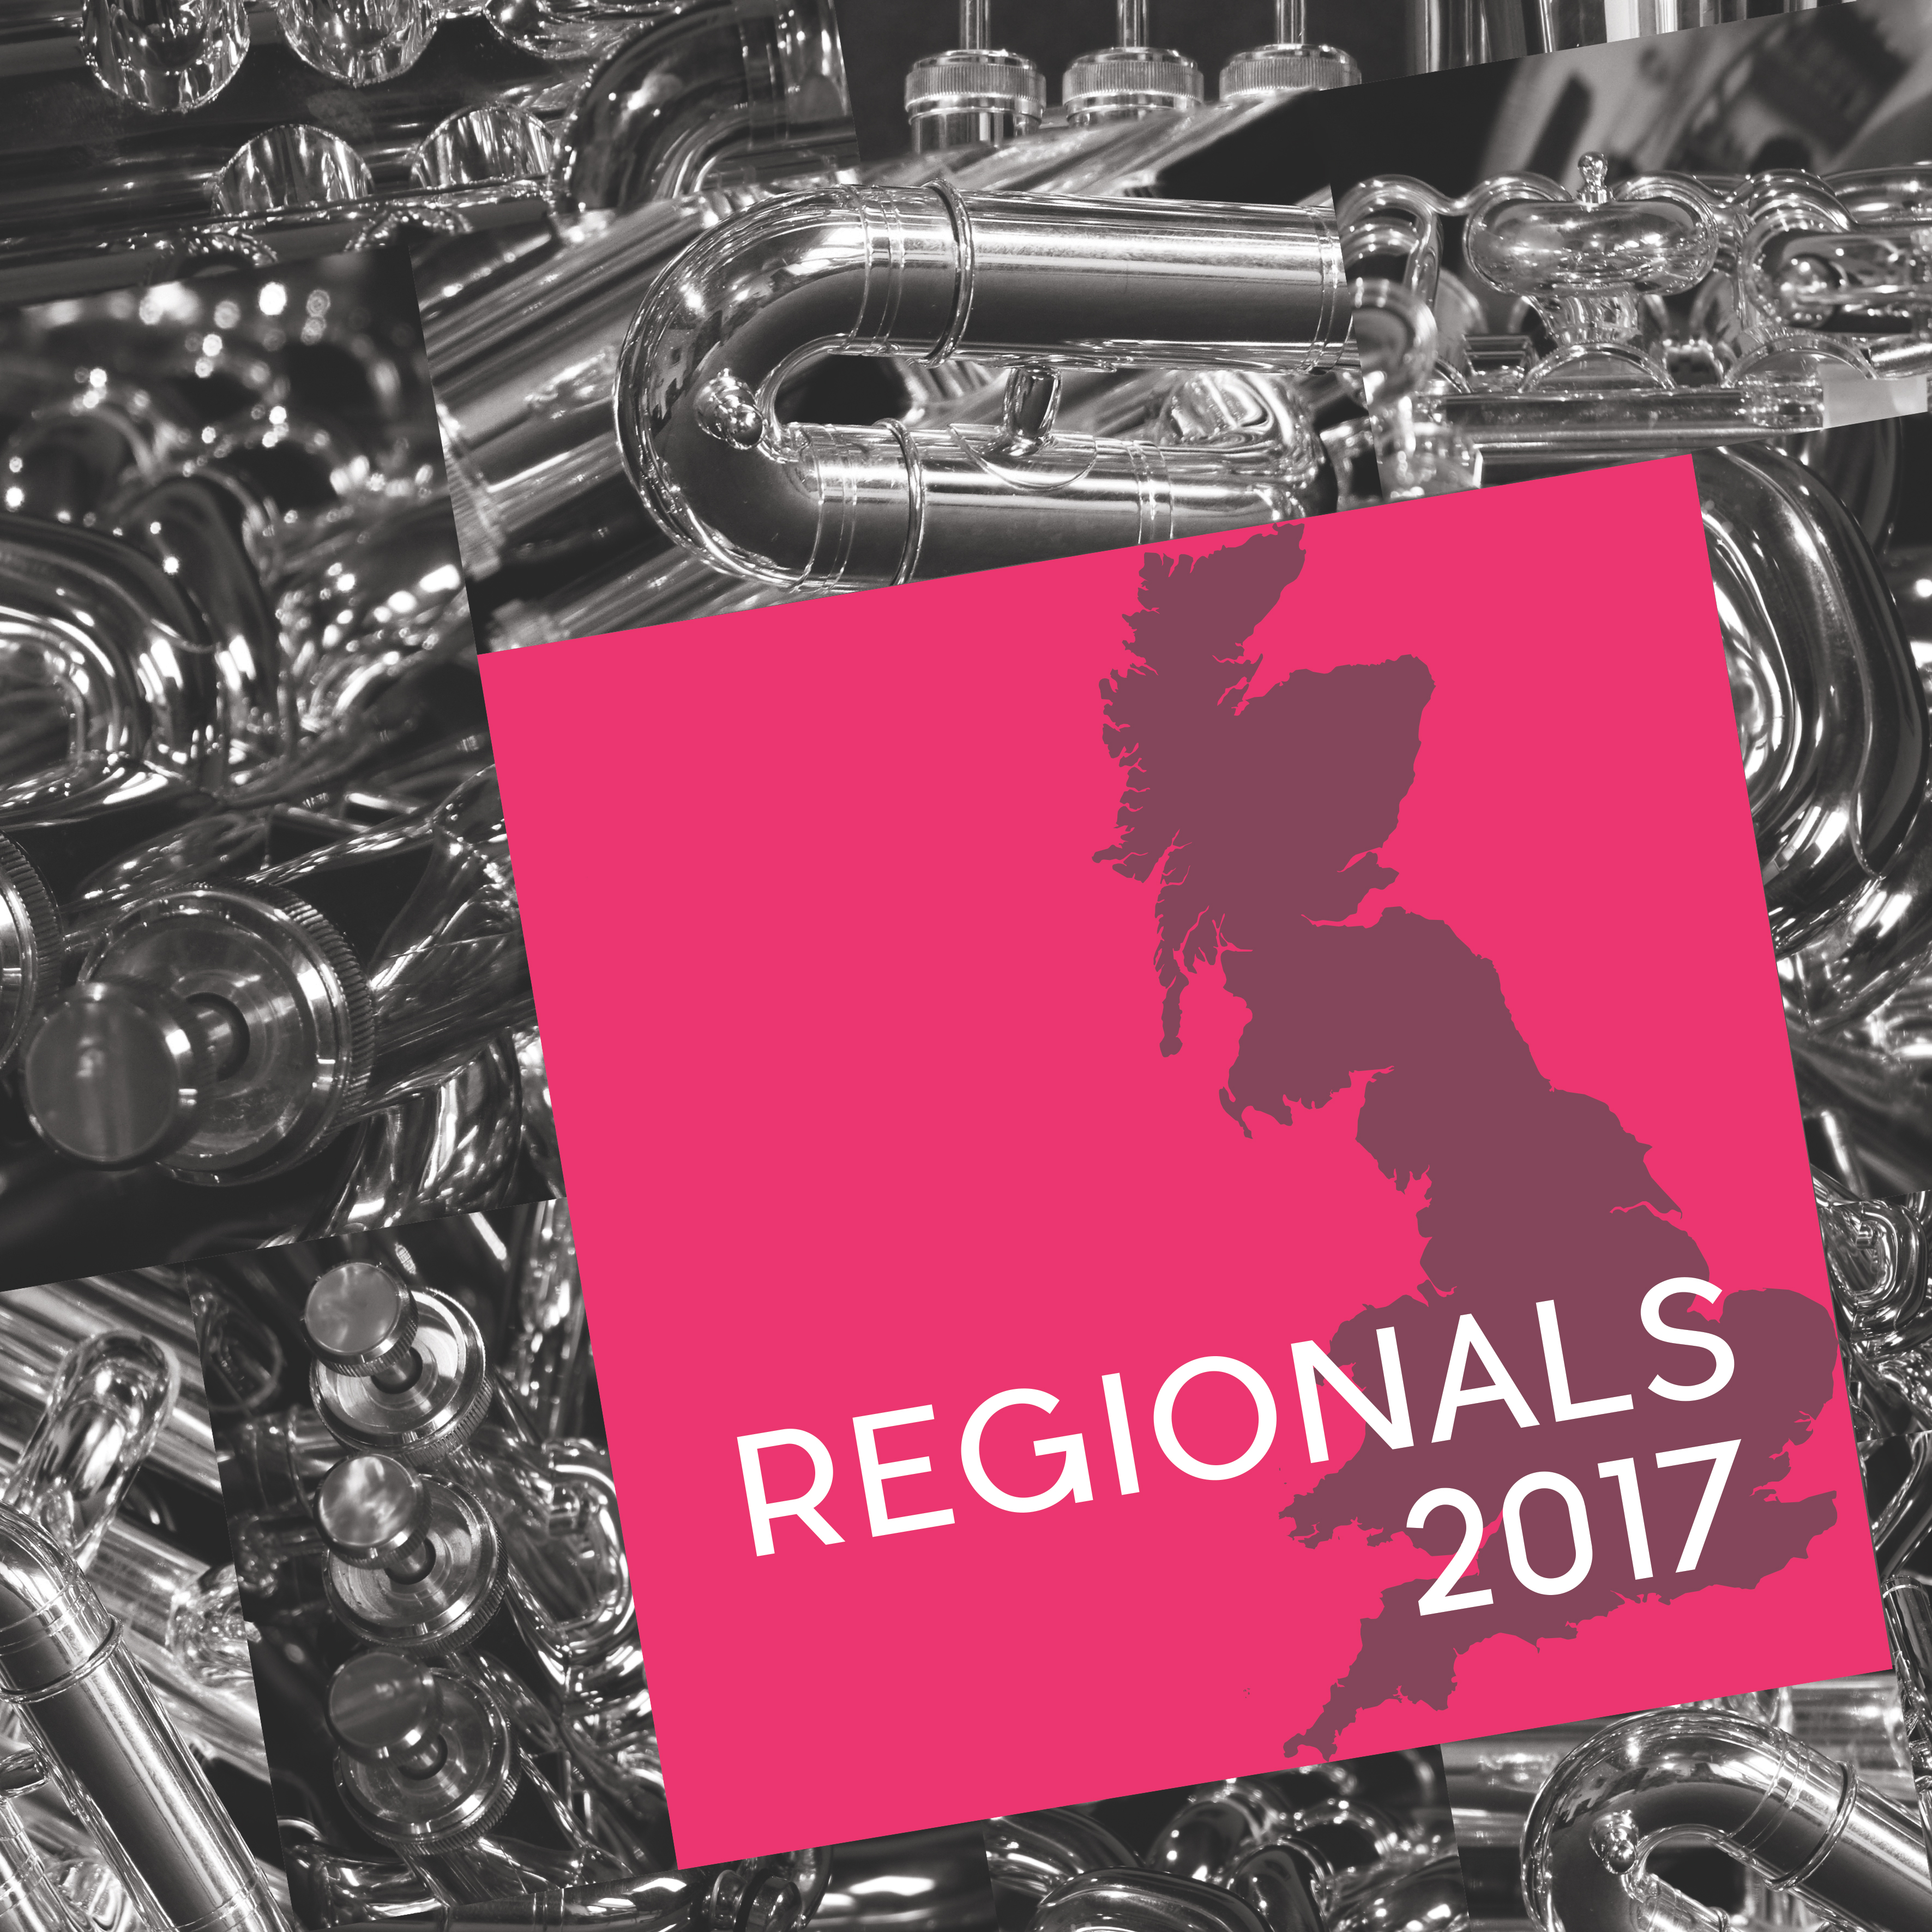 Regionals 2017 - Download